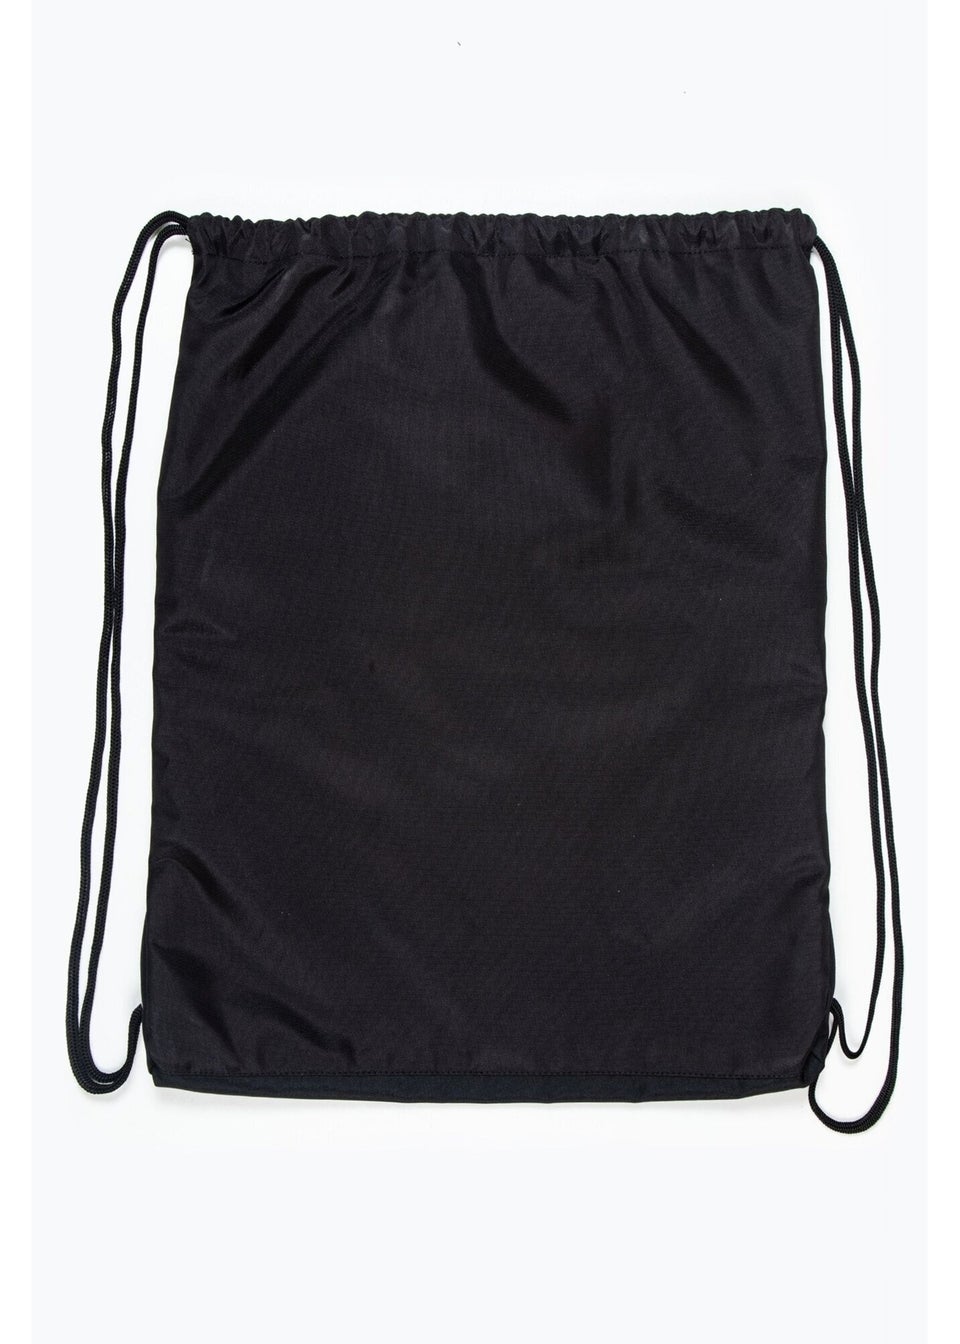 Hype Black Crest Drawstring Bag